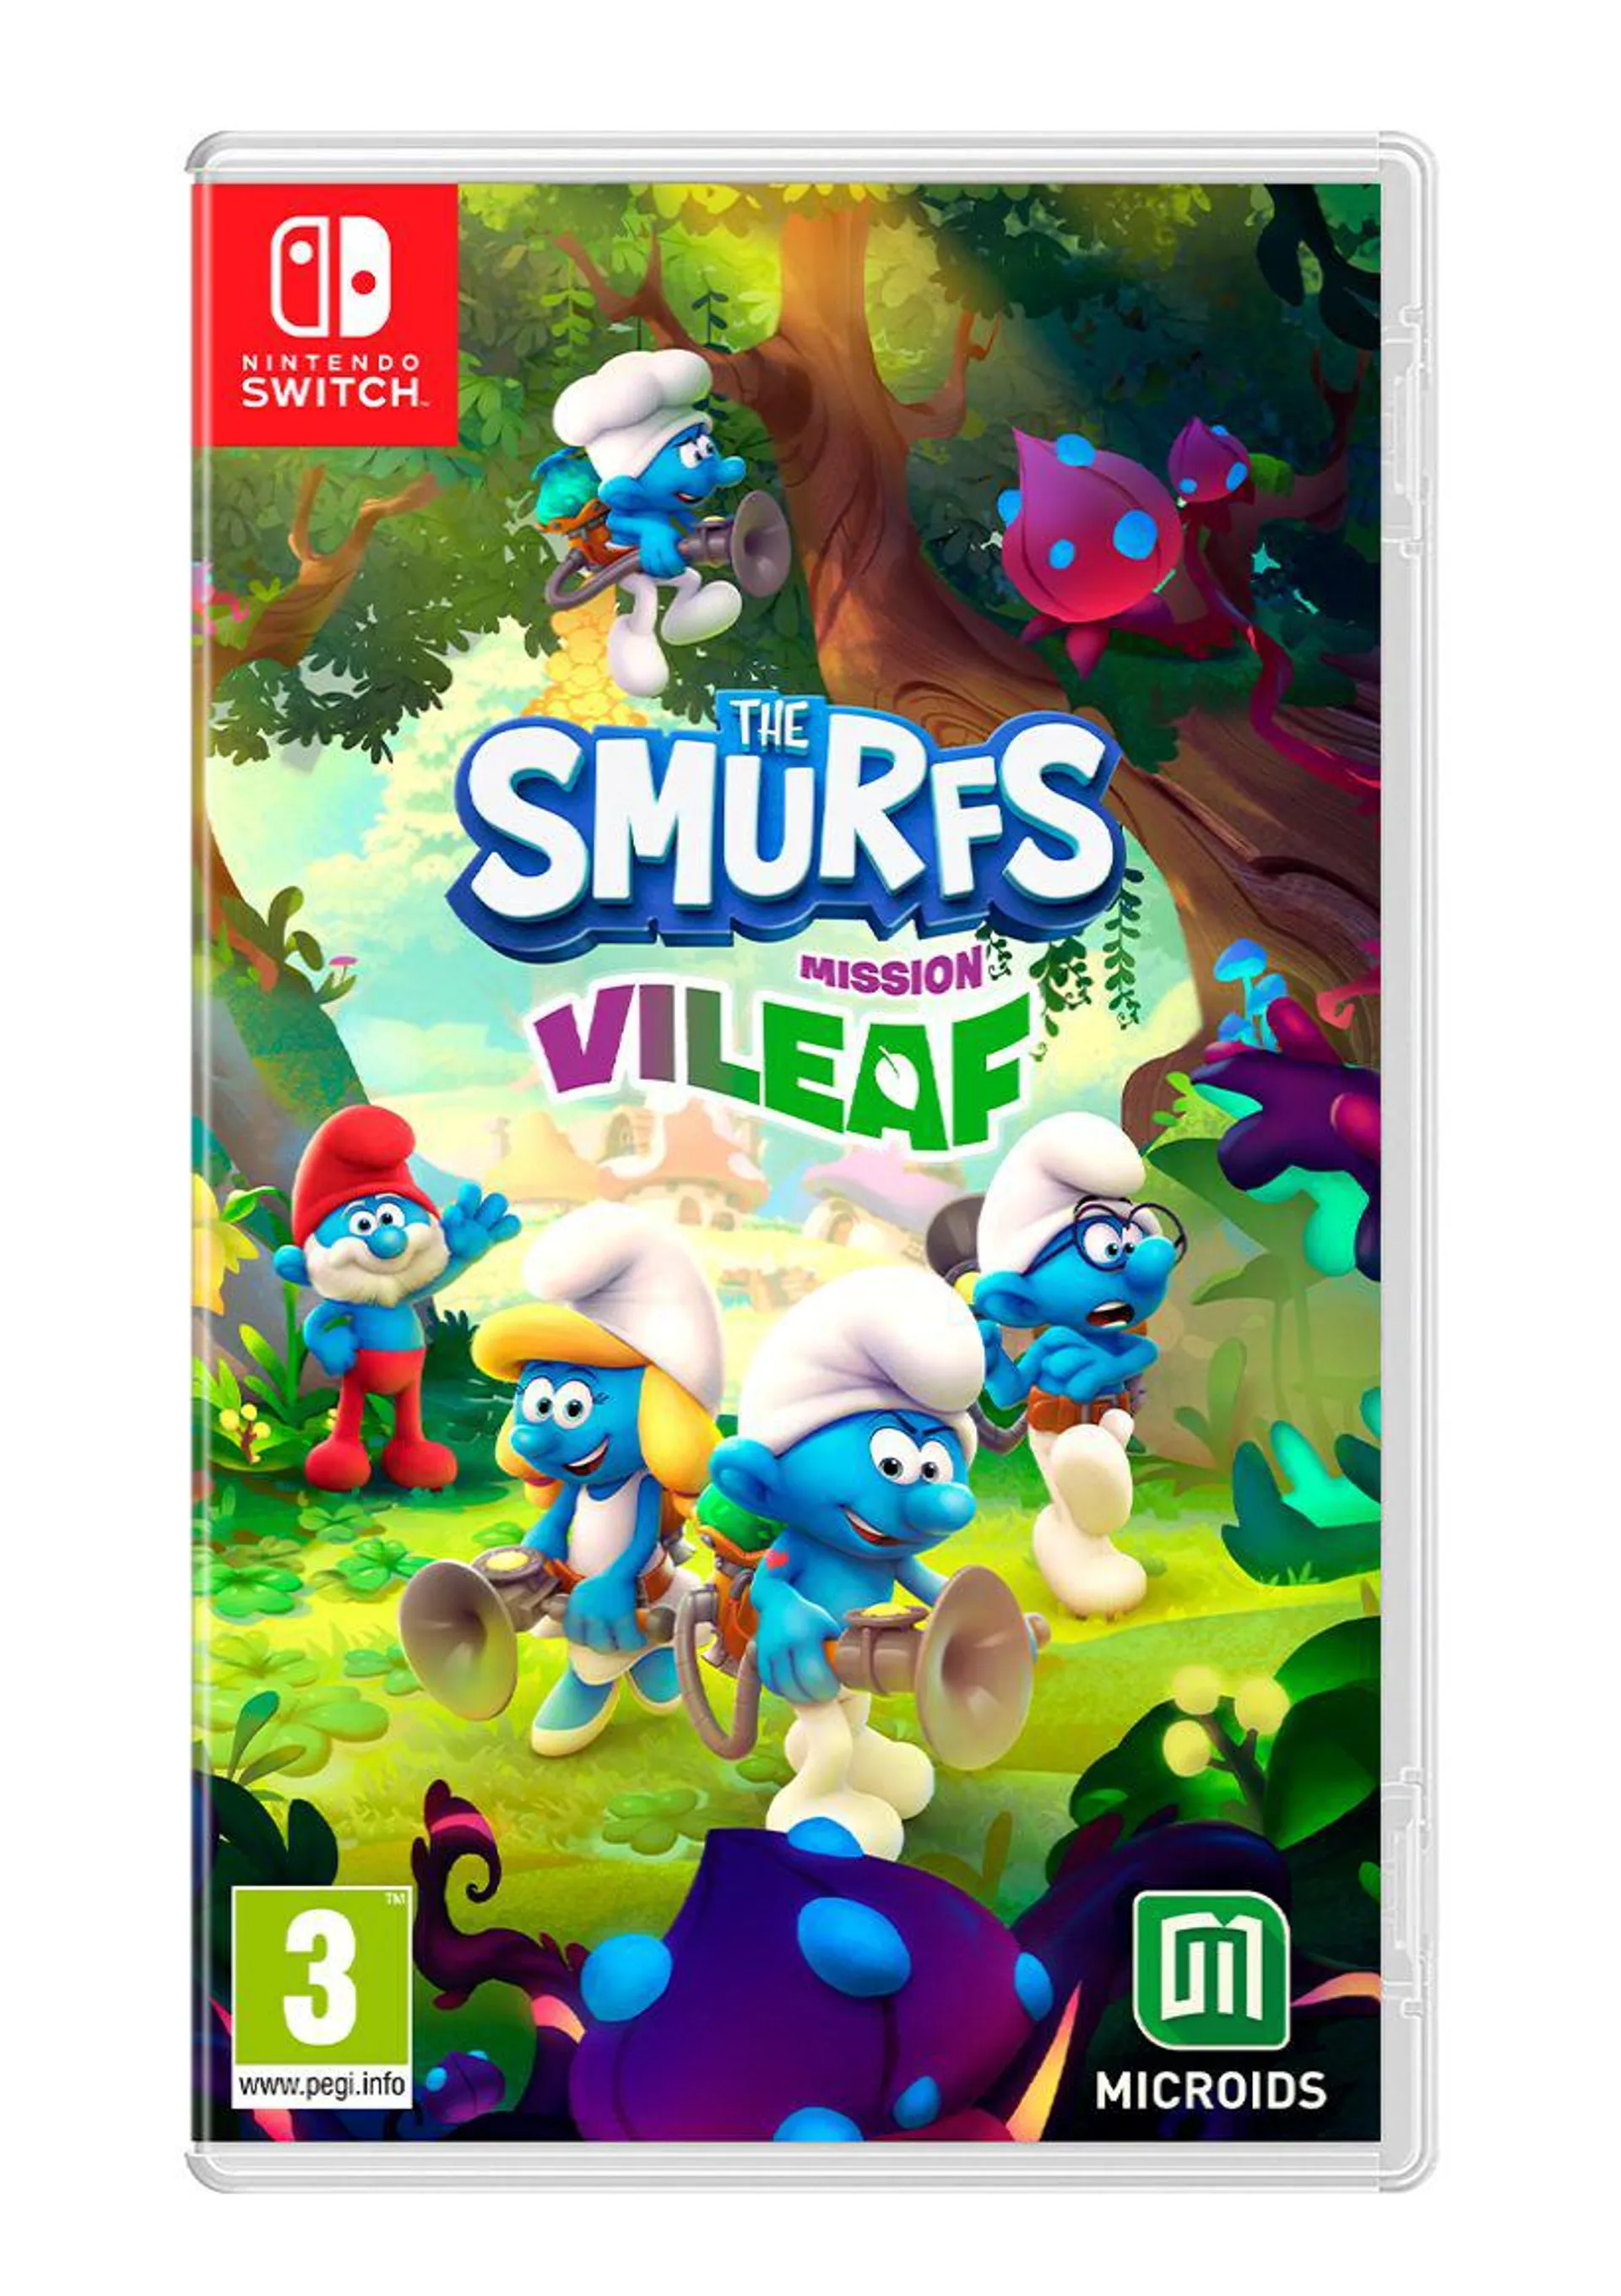 The Smurfs: Mission ViLeaf - Smurftastic Edition on Nintendo Switch